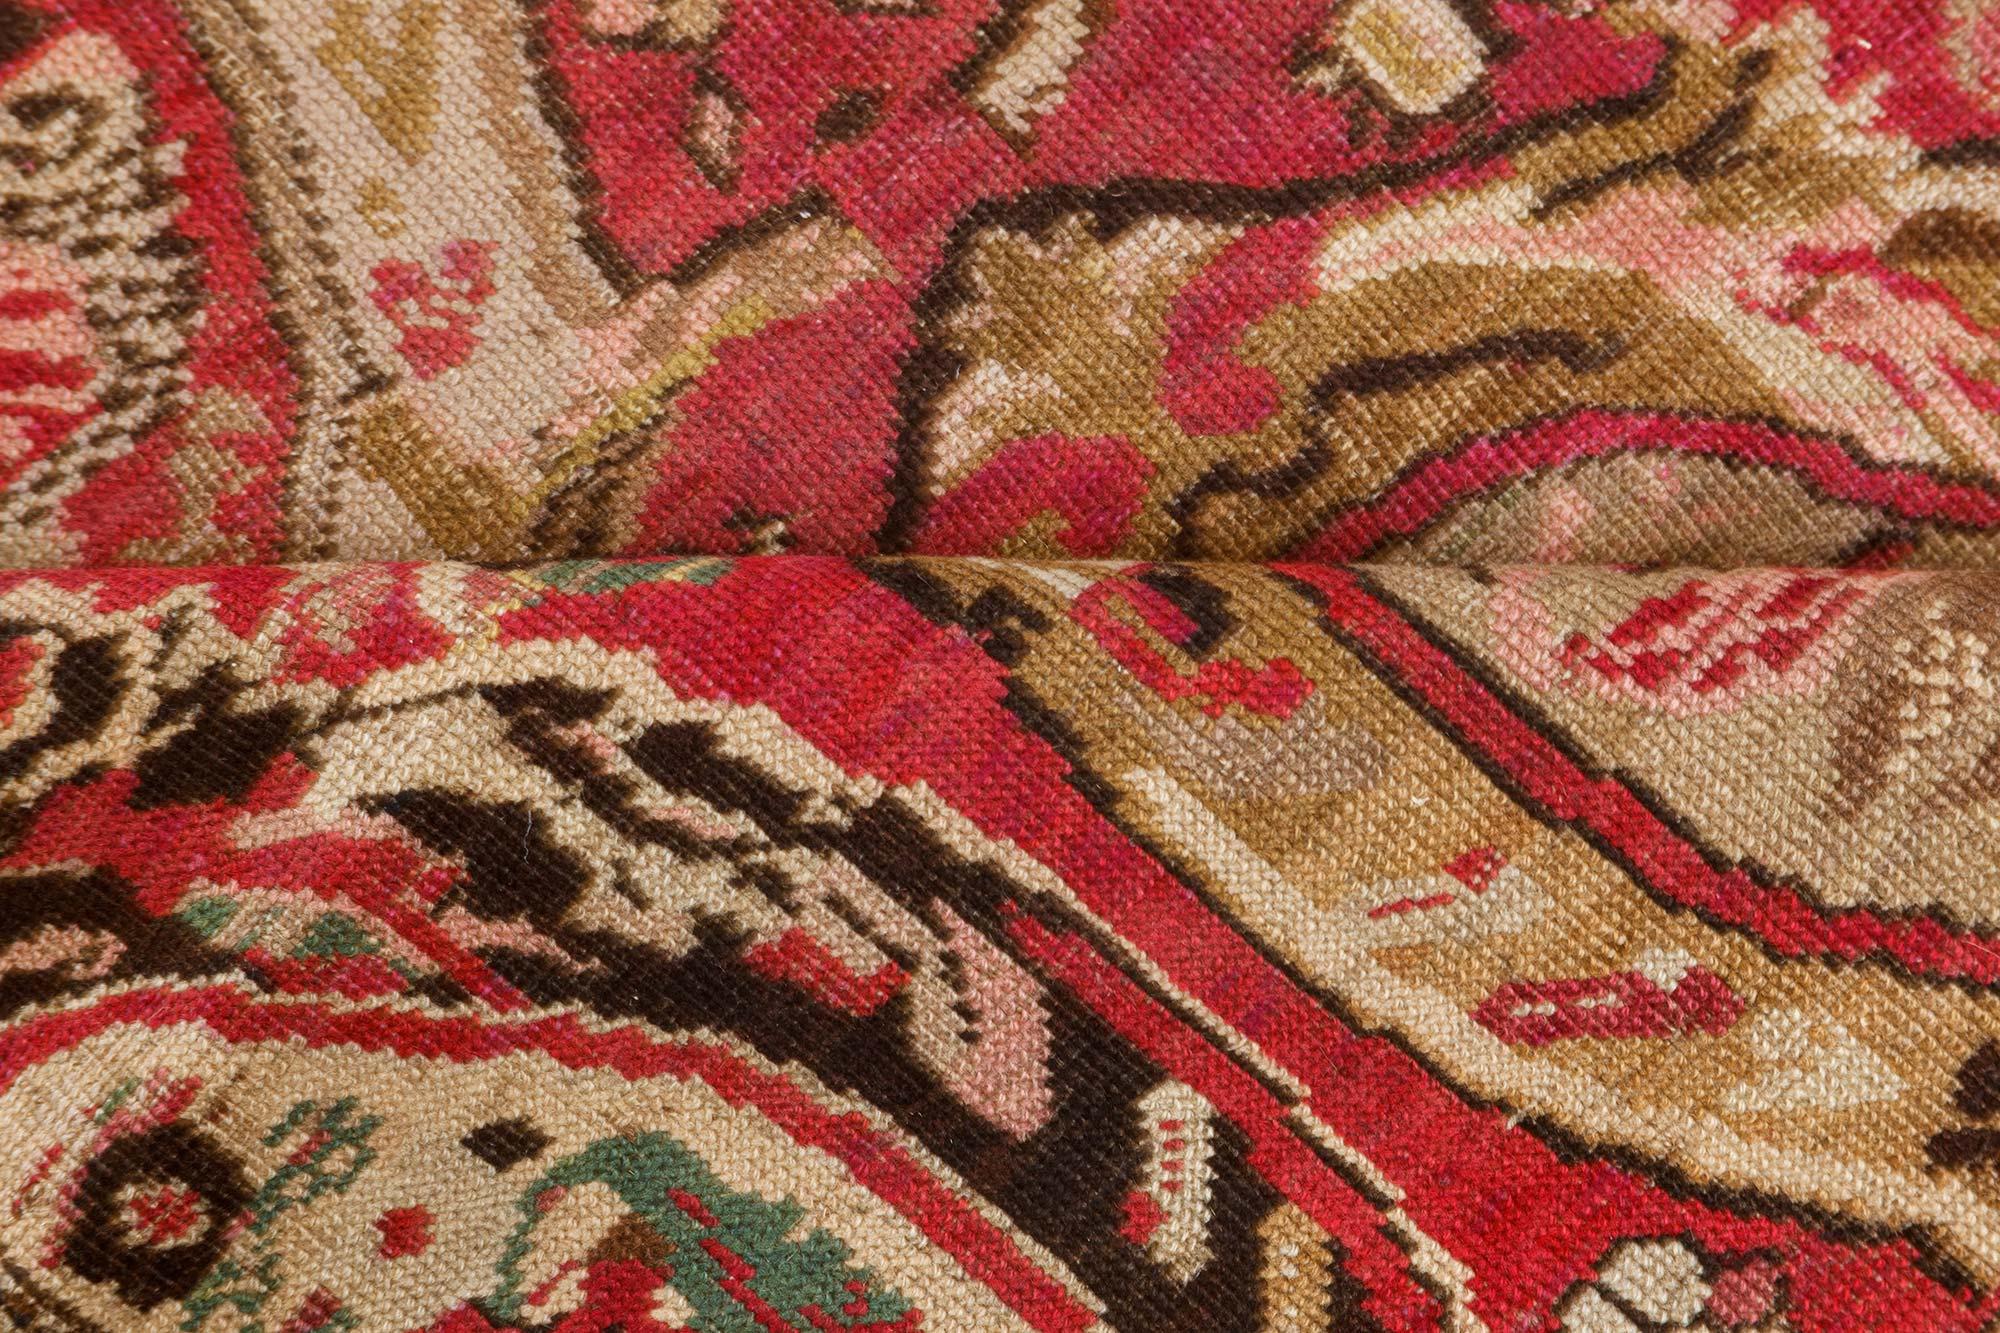 Authentic Caucasian Karabagh botanic handmade wool carpet
Size: 6'8